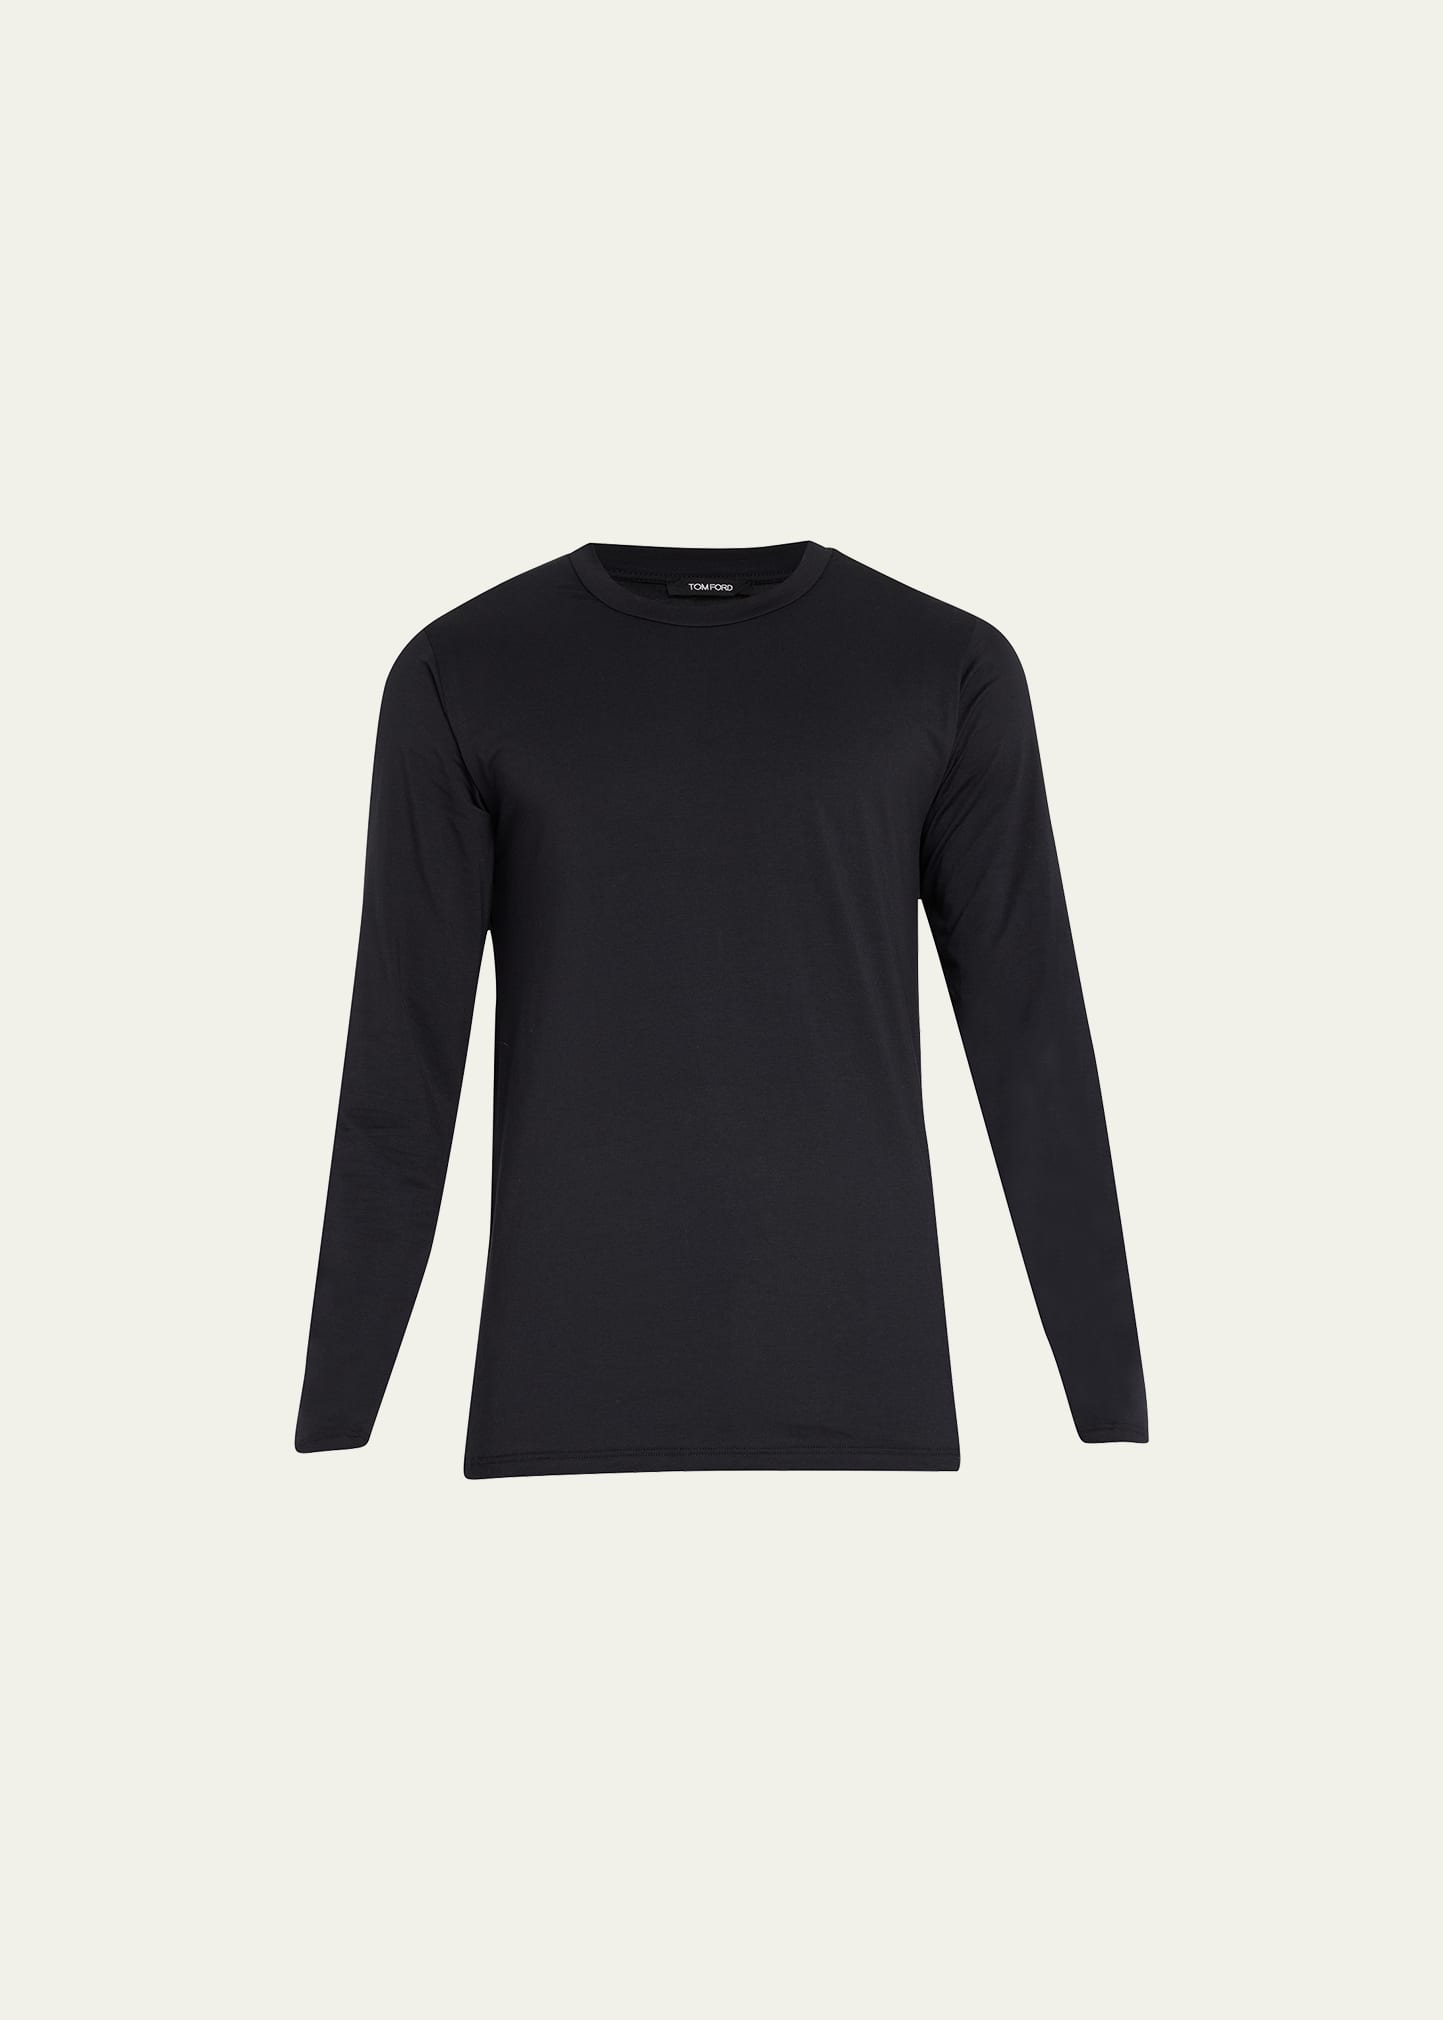 Tom Ford Men's Modal-stretch Crewneck T-shirt In Black